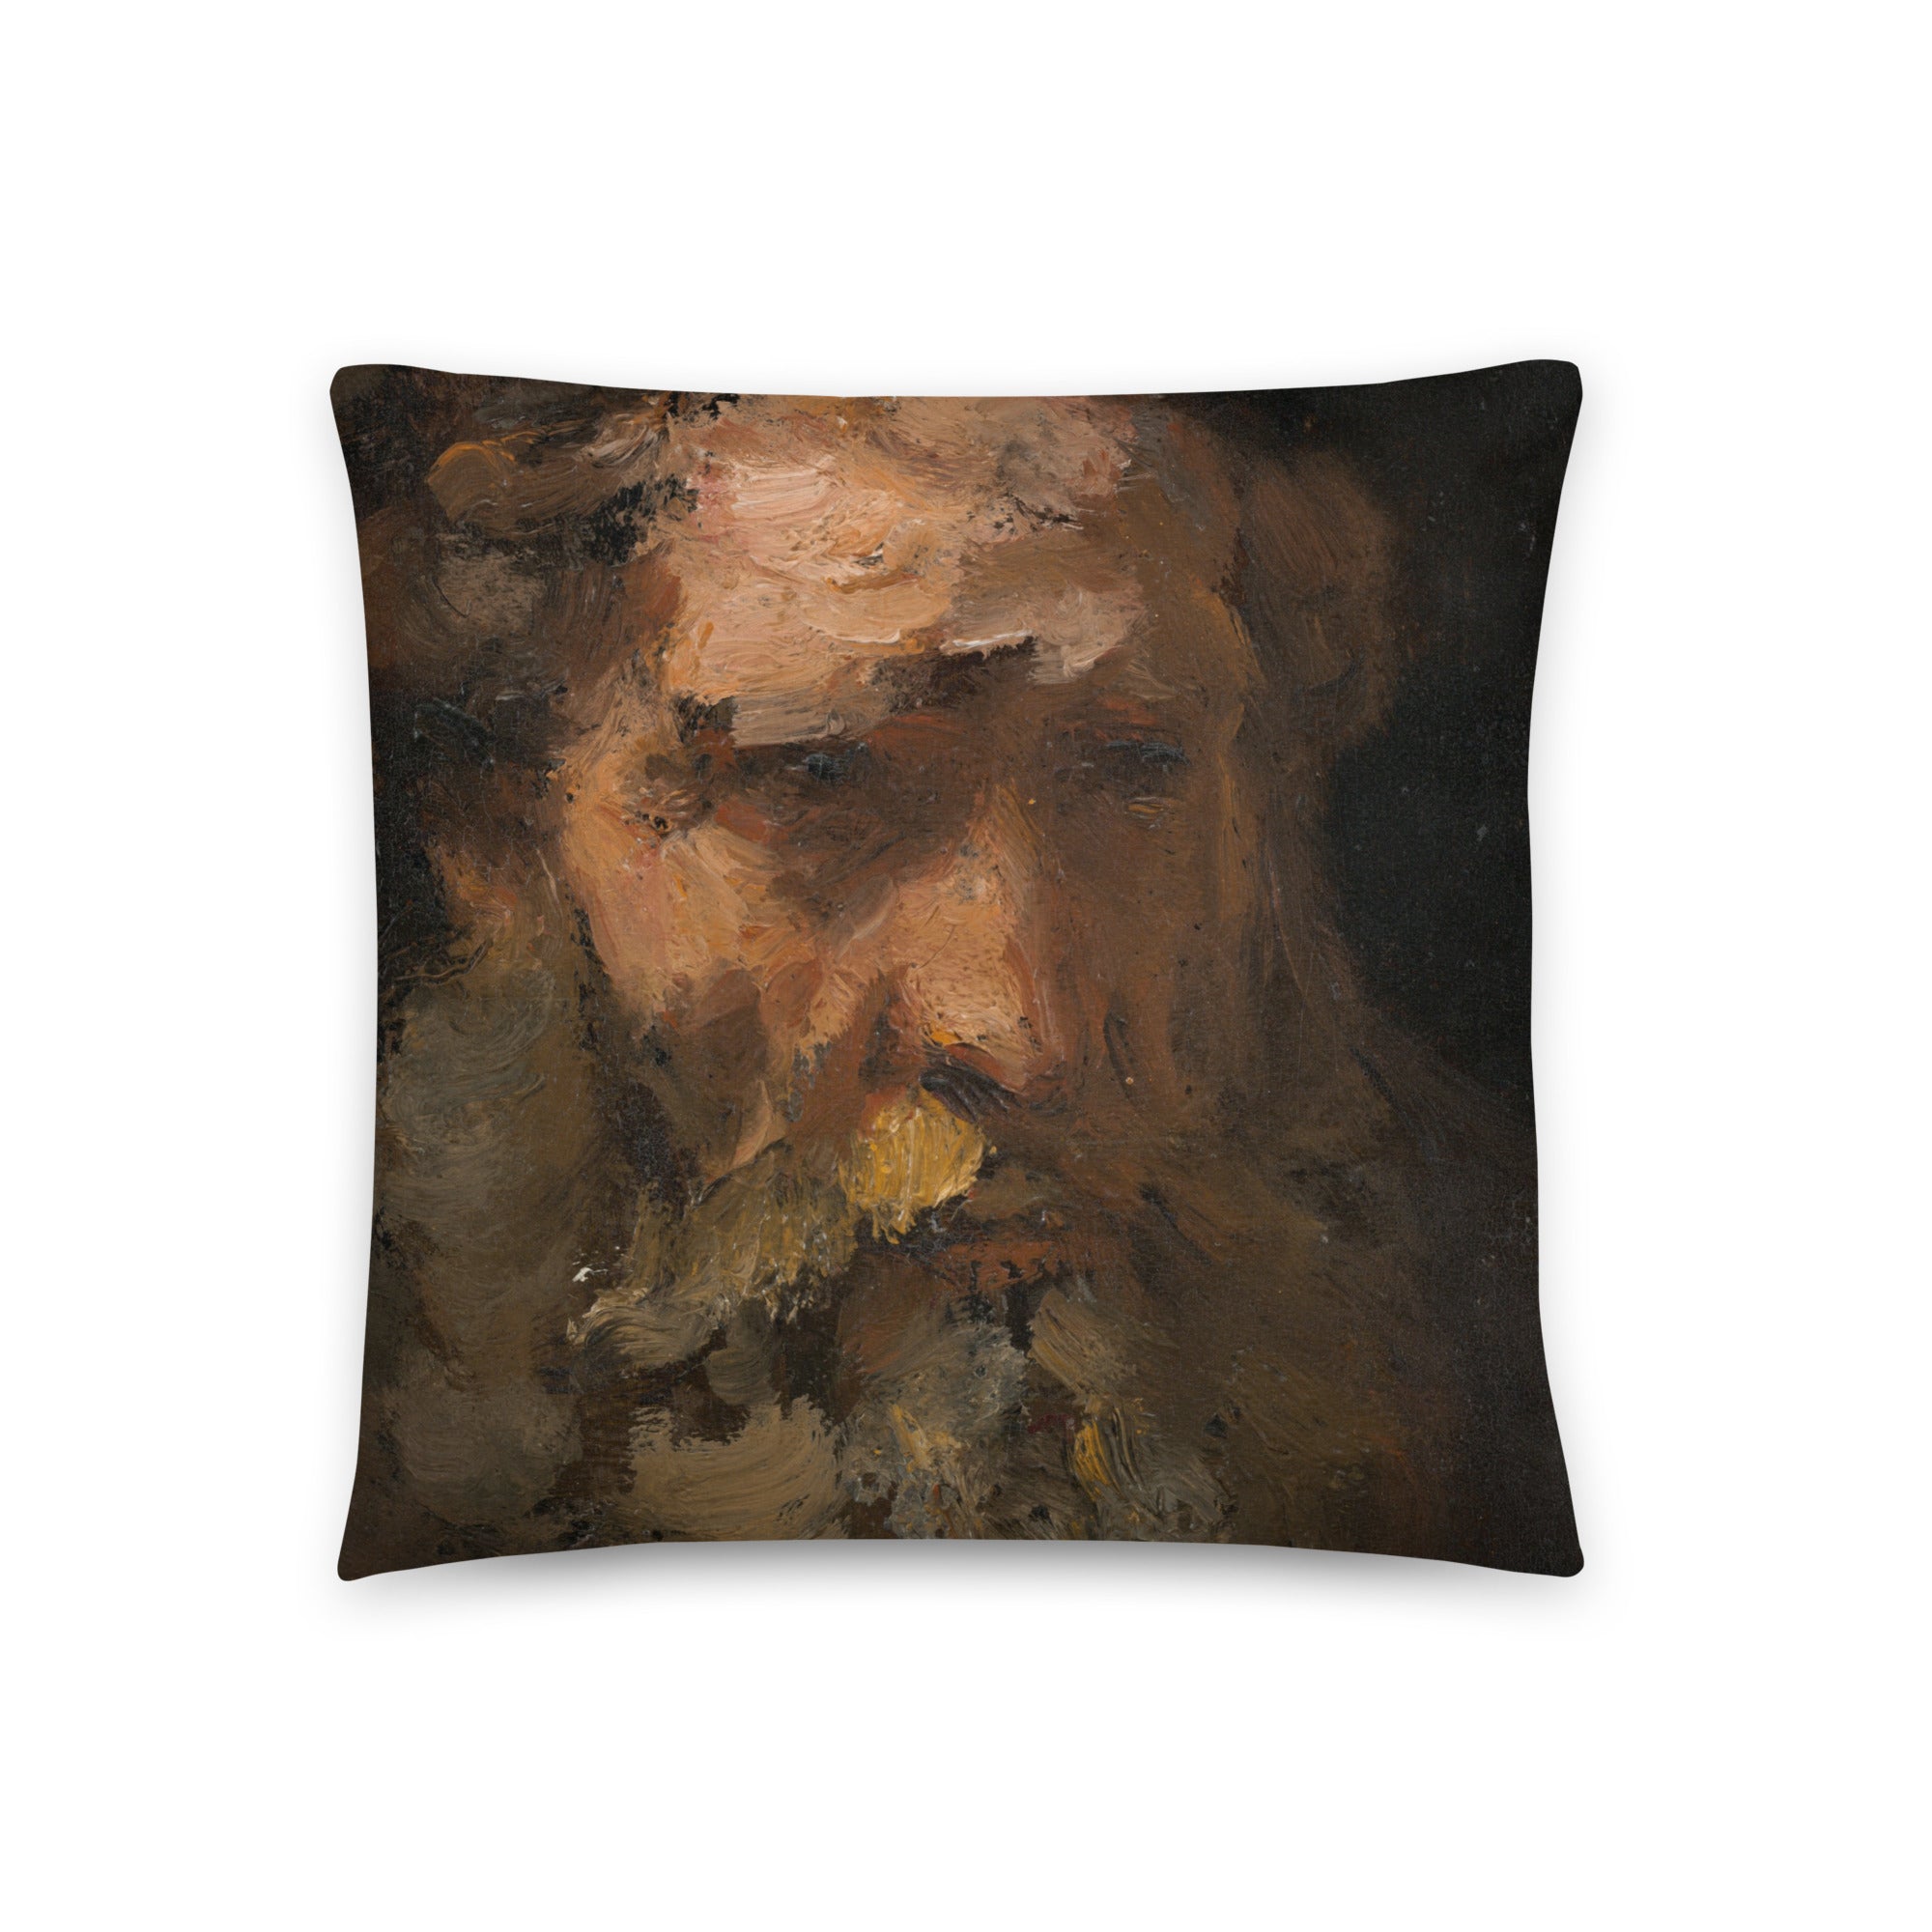 Painted Man Pillow